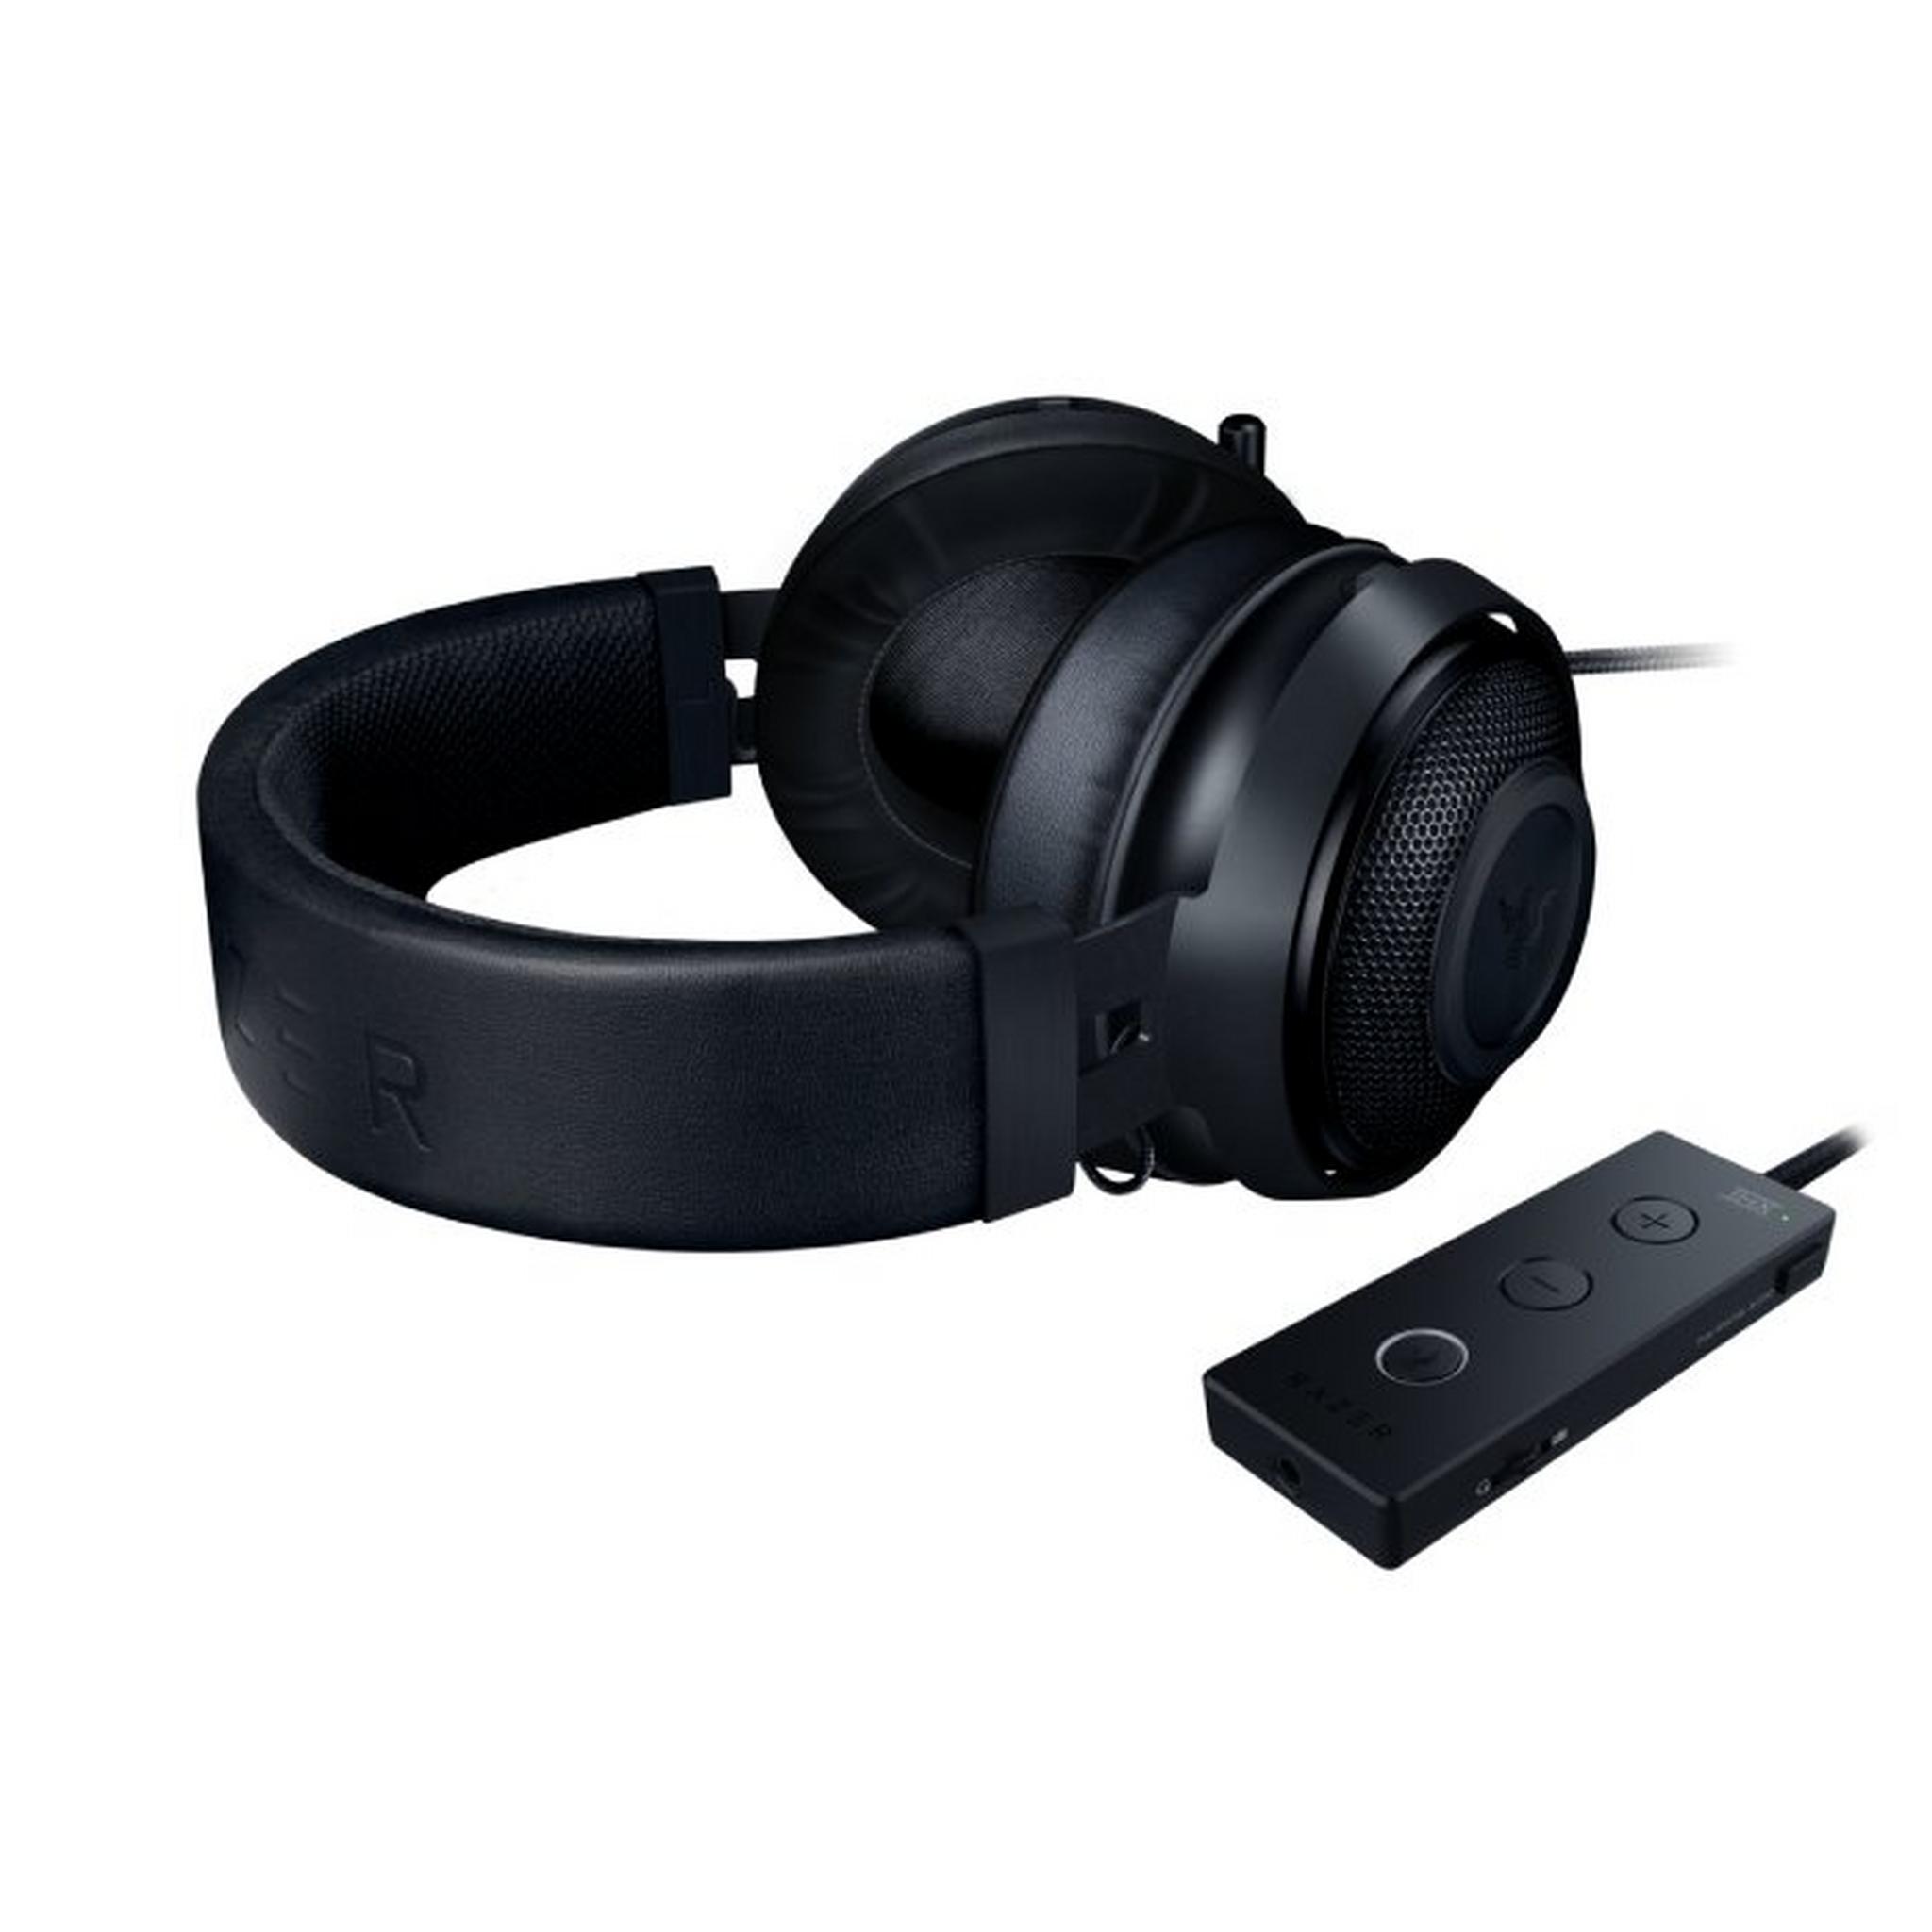 Razer Kraken Tournament Edition Gaming Headset - Black